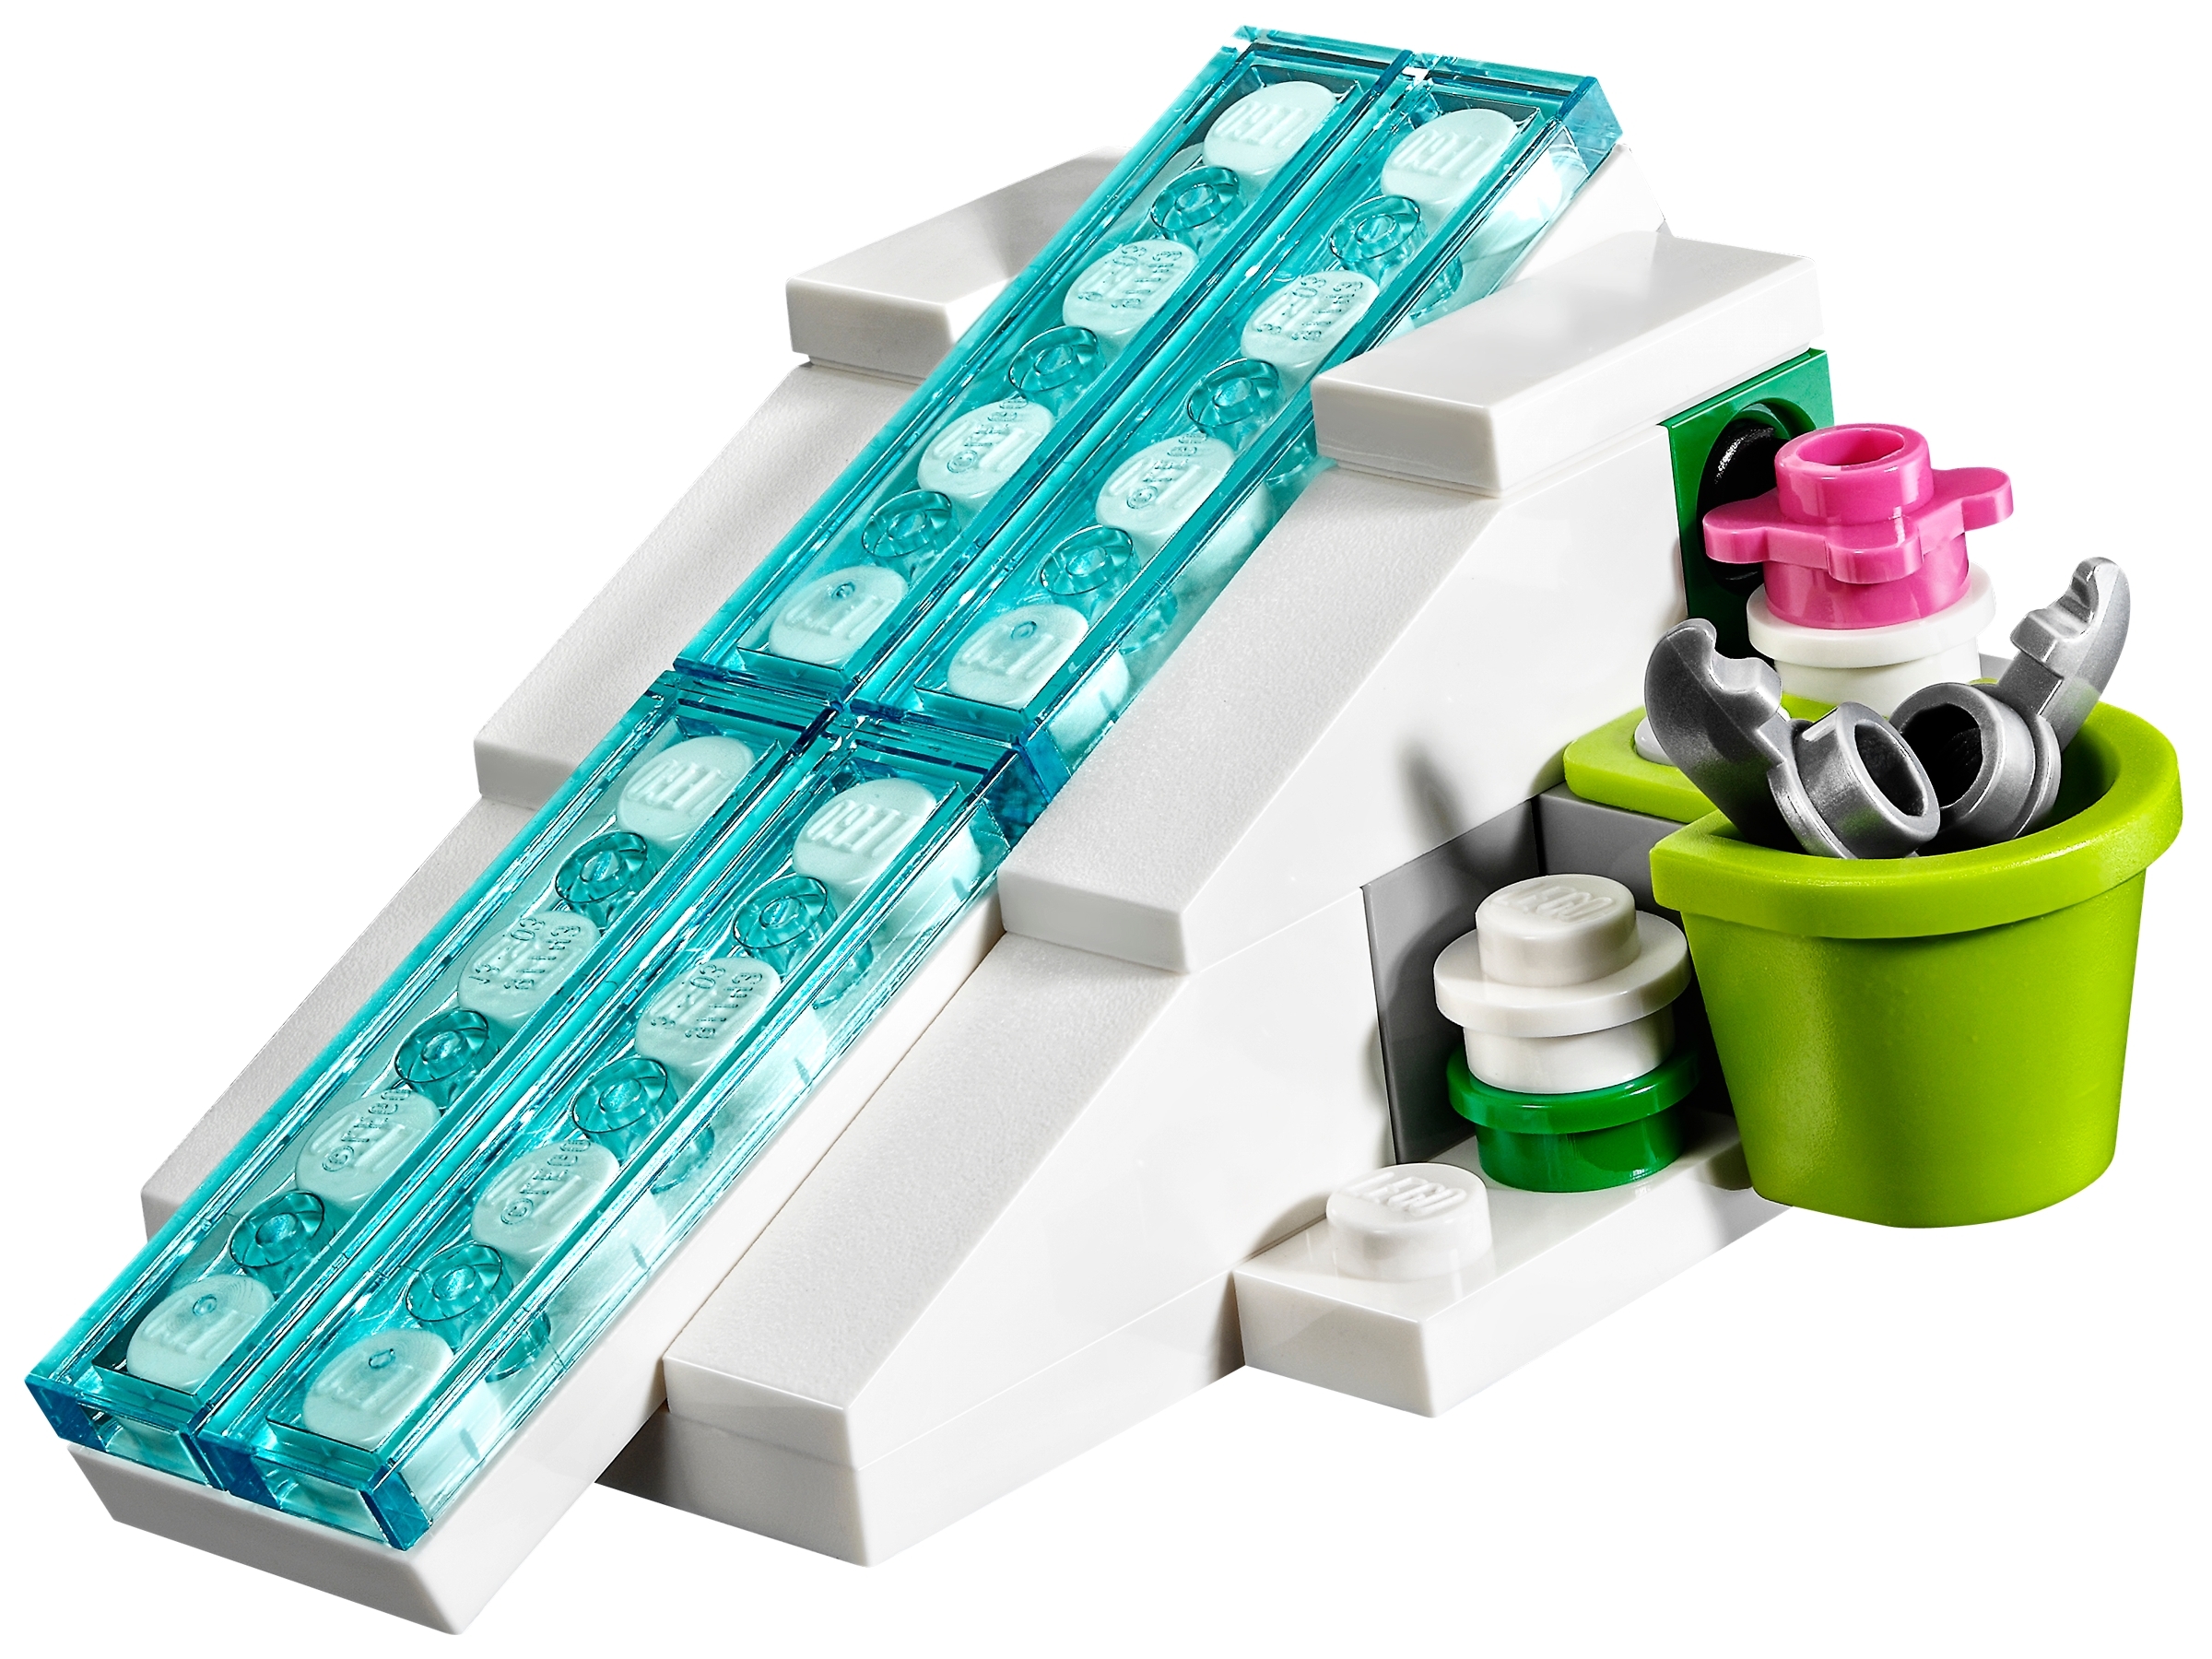 41062 LEGO Castle Elsa's Sparkling Ice for sale online 